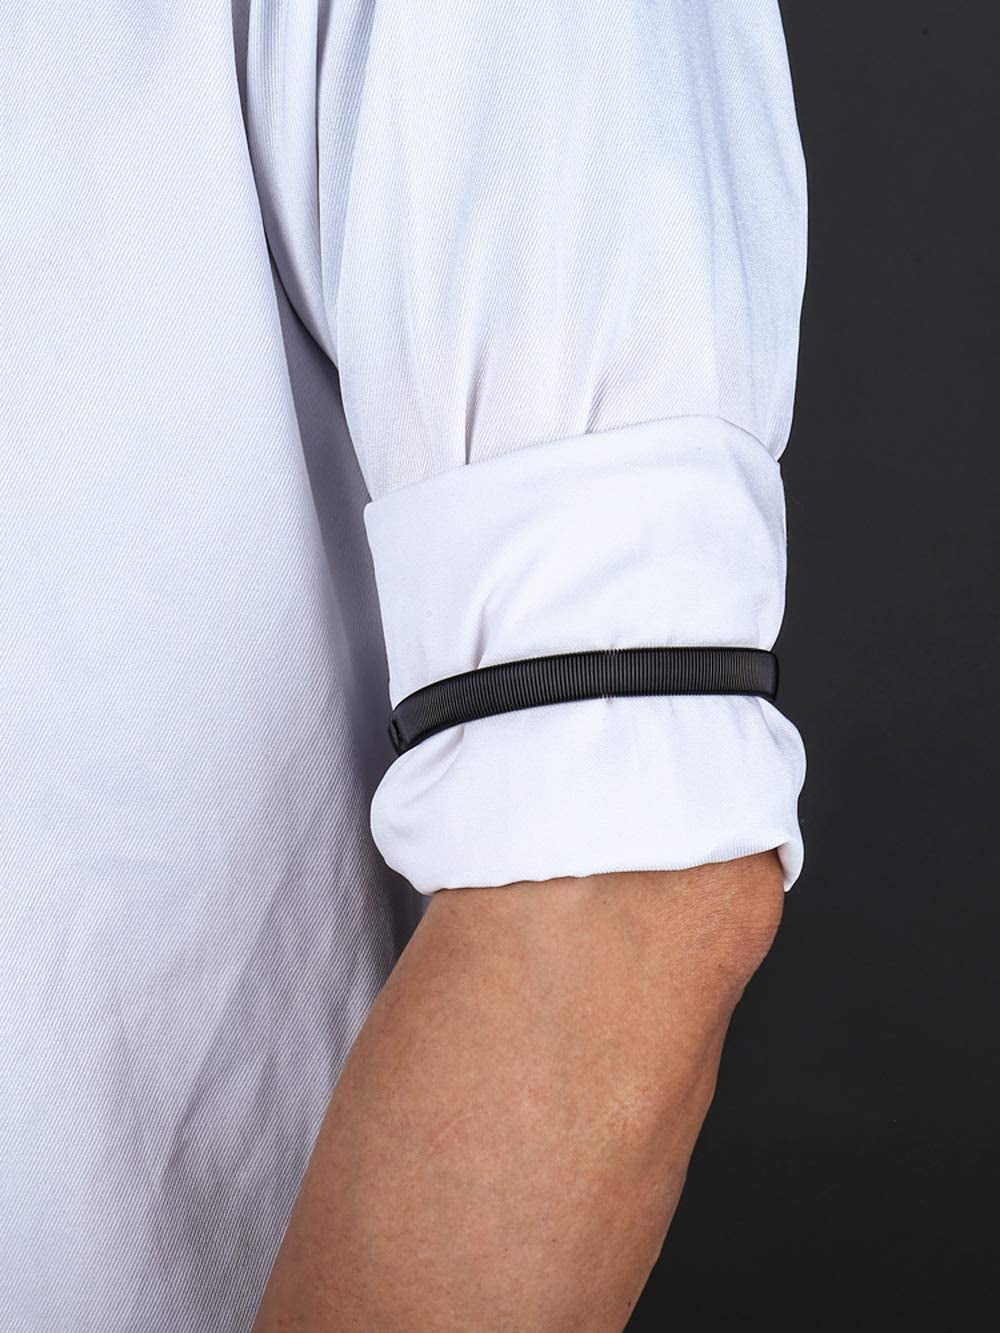 6 Pieces (3 Pairs) Unisex Elastic Adjustable Armbands Anti-Slip Shirt  Sleeve Holders Adjustable Arm Shirt Garters Hold Up Sleeve Garters Elastic  Armbands, Black, Wine-red, Blue with Beige Edge